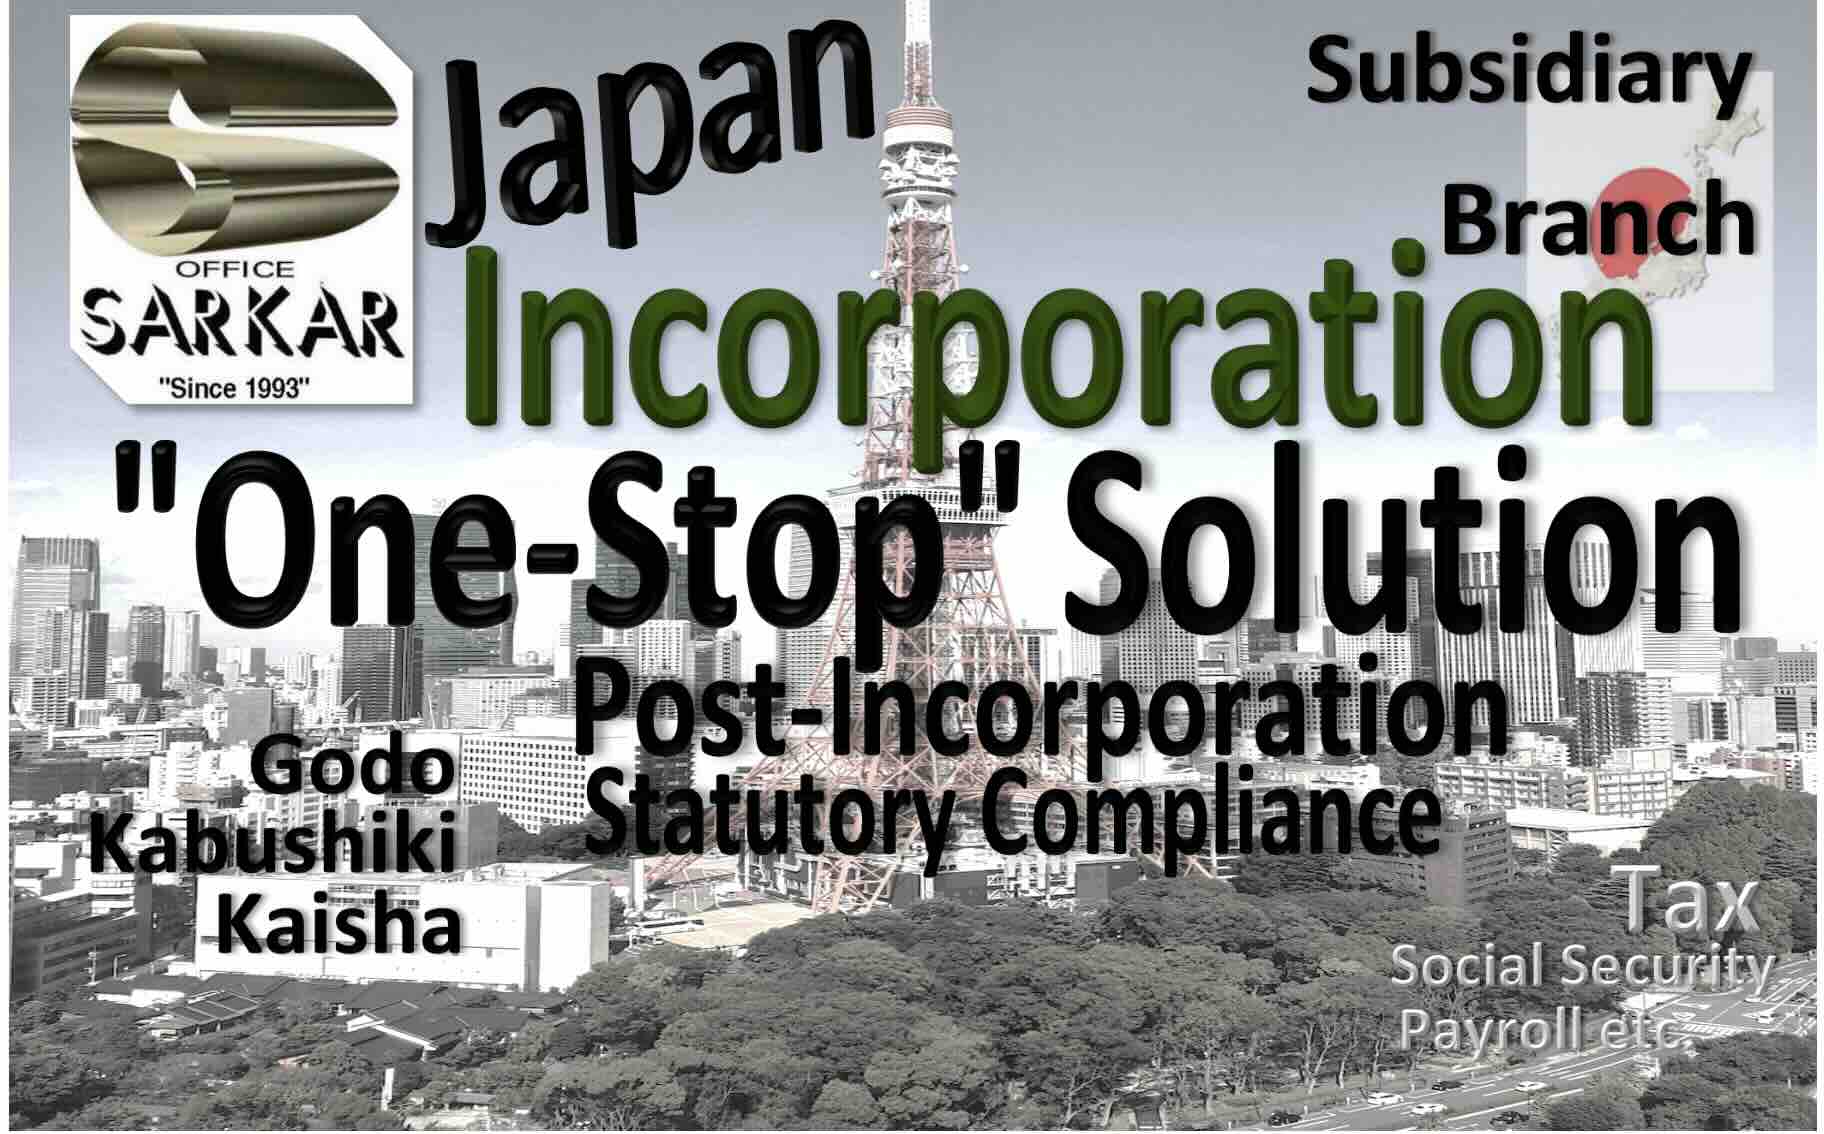 Japan Incorporation and Statutory Compliance.